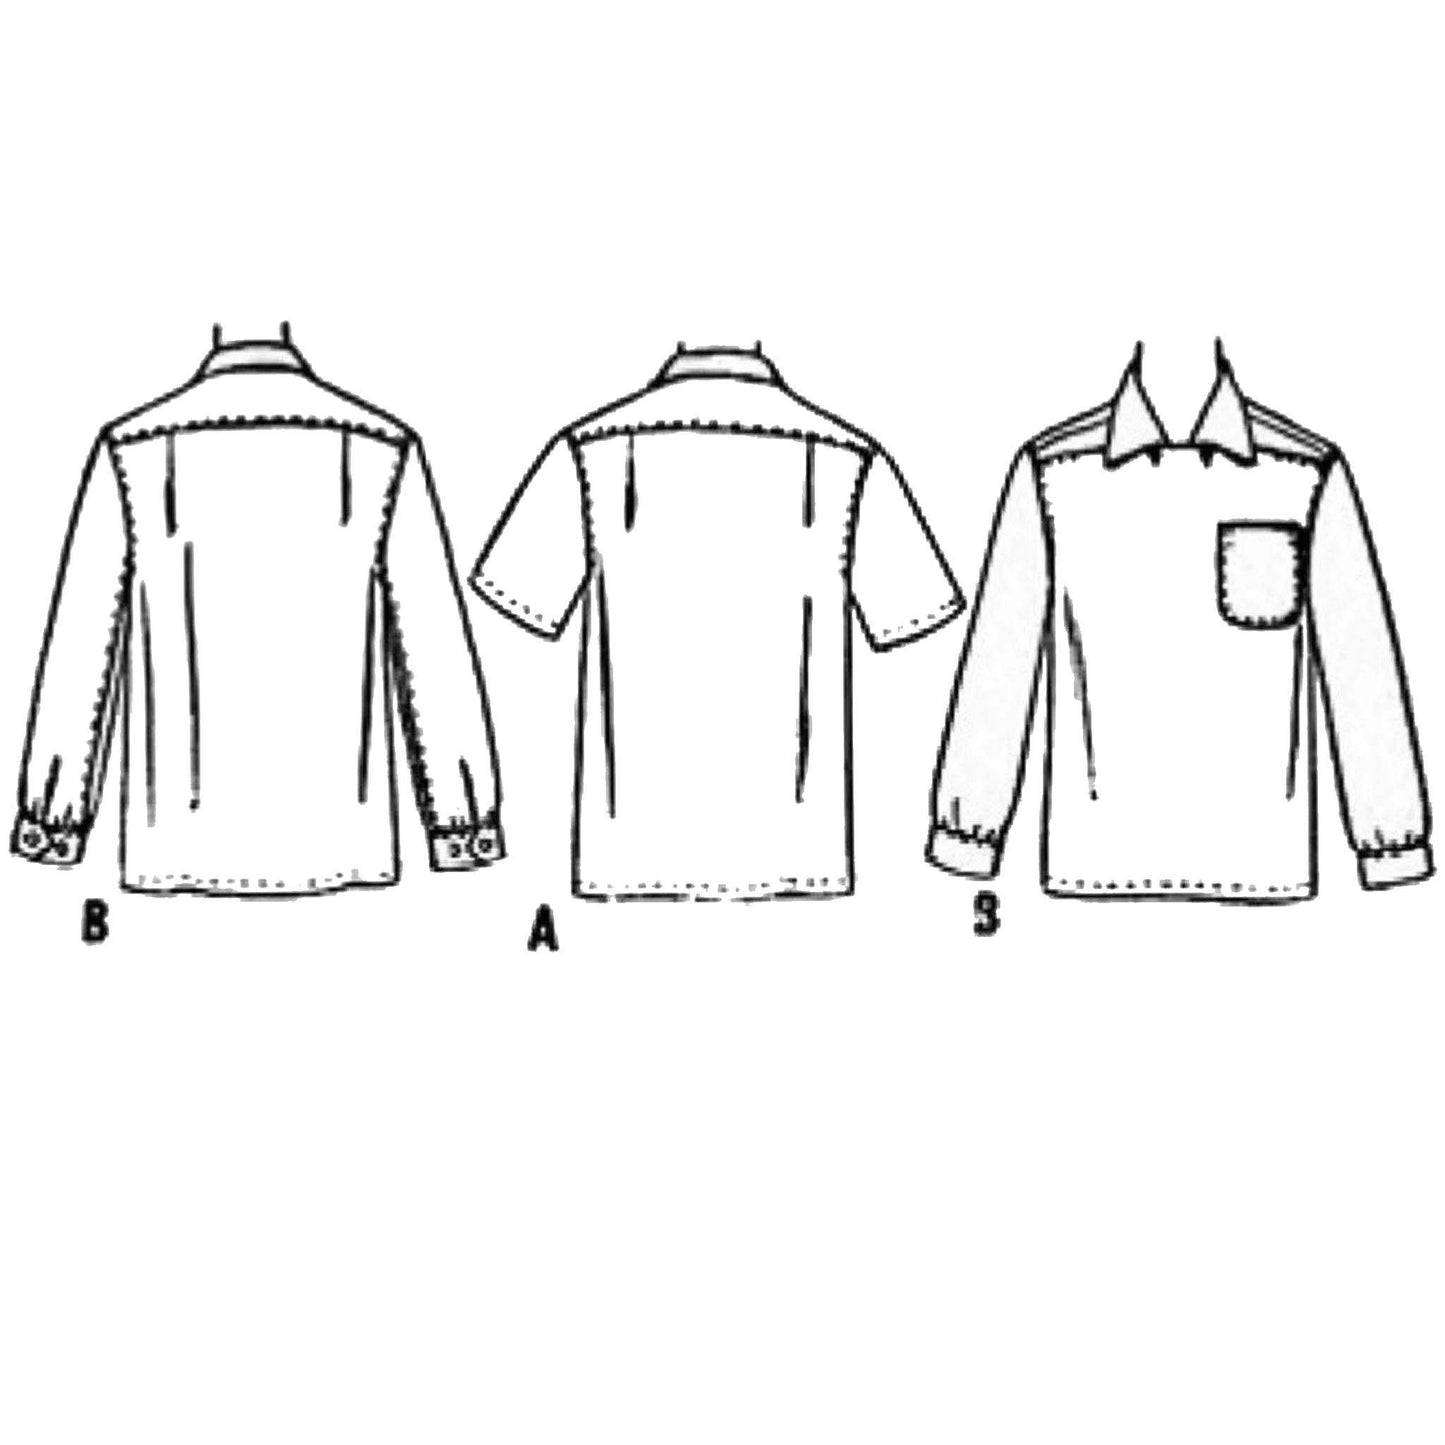 1950s Pattern, Men's Sports Shirt - outline